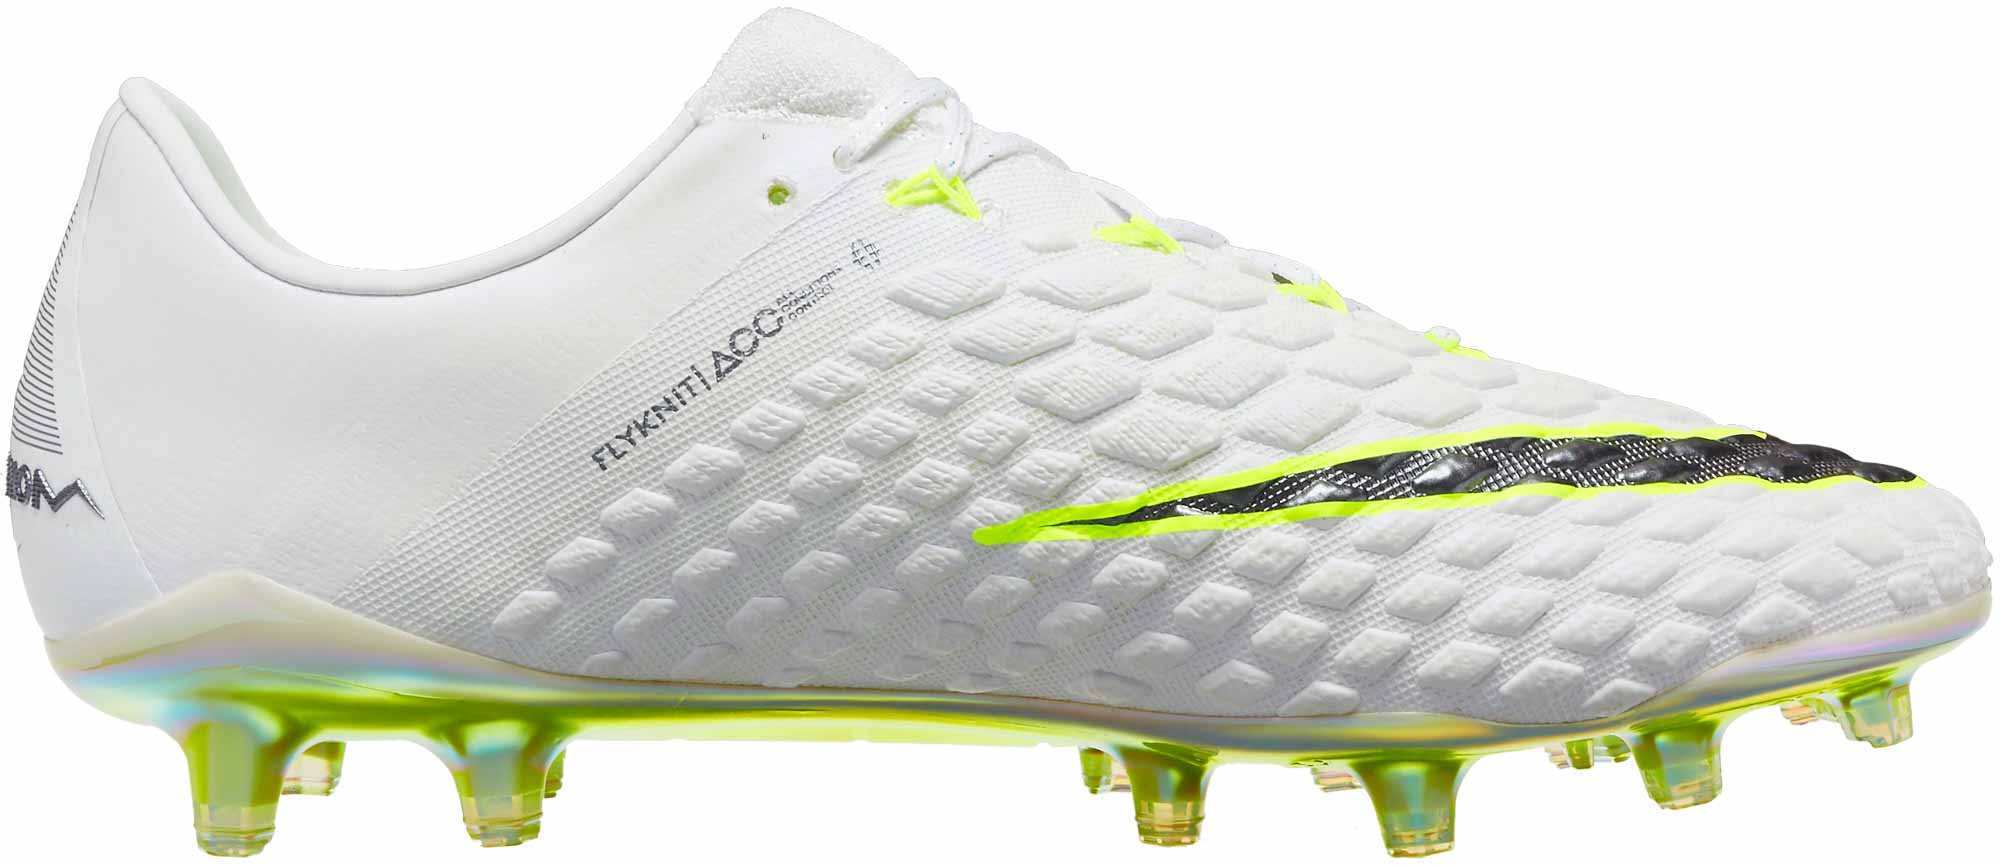 Nike Hypervenom Phantom II Tech Craft 2.0 FG Soccer Boots